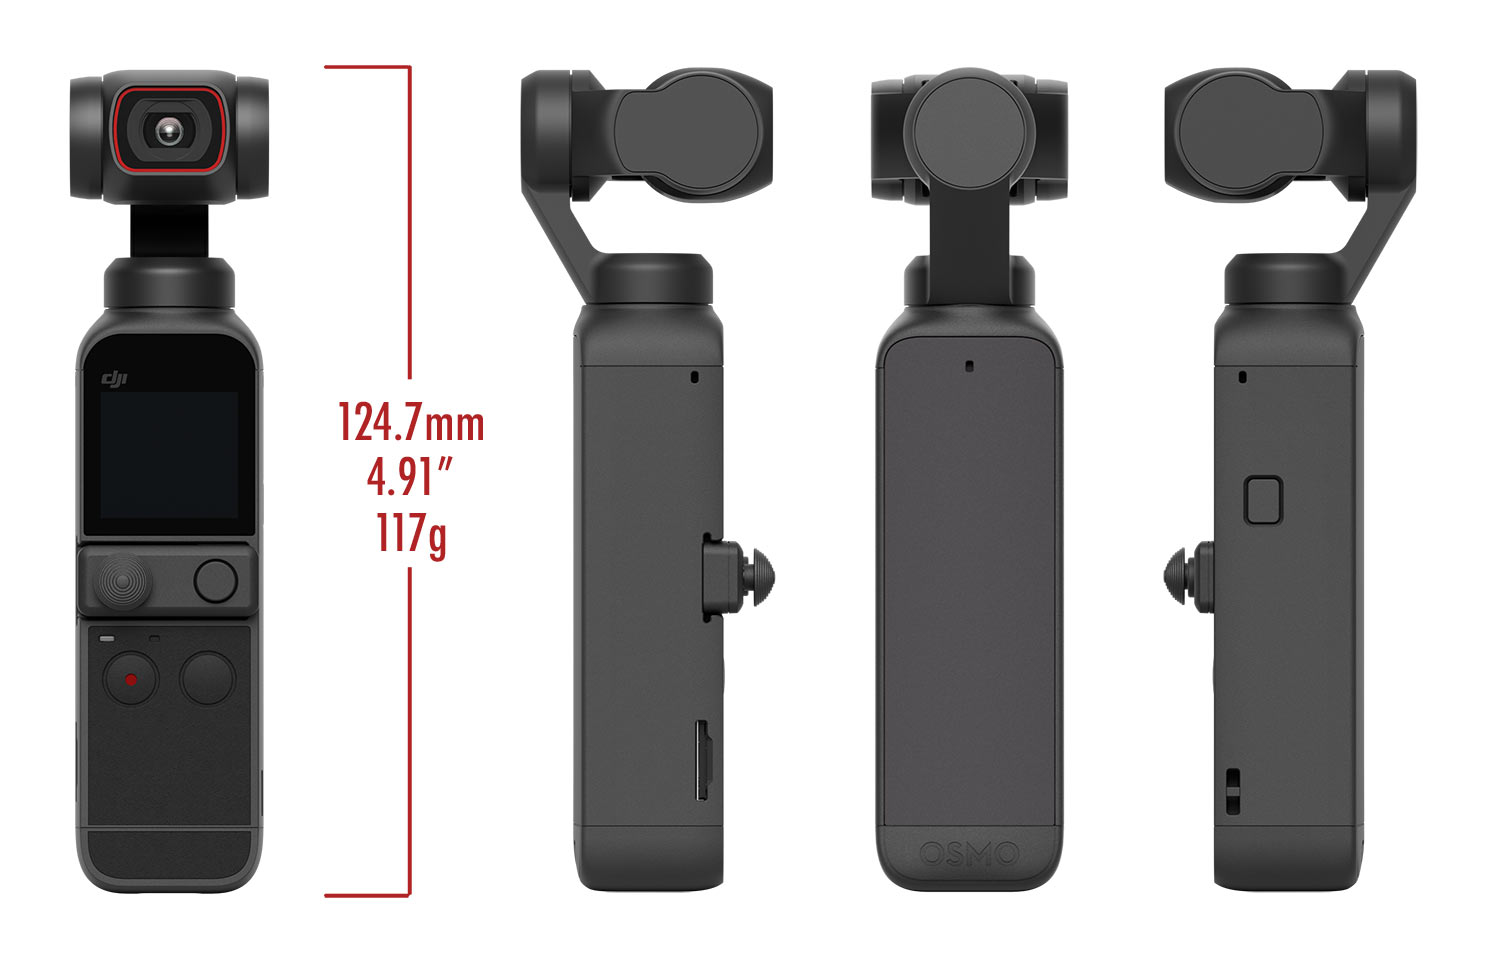 DJI Pocket 2 gimbal action cam measurements and weight